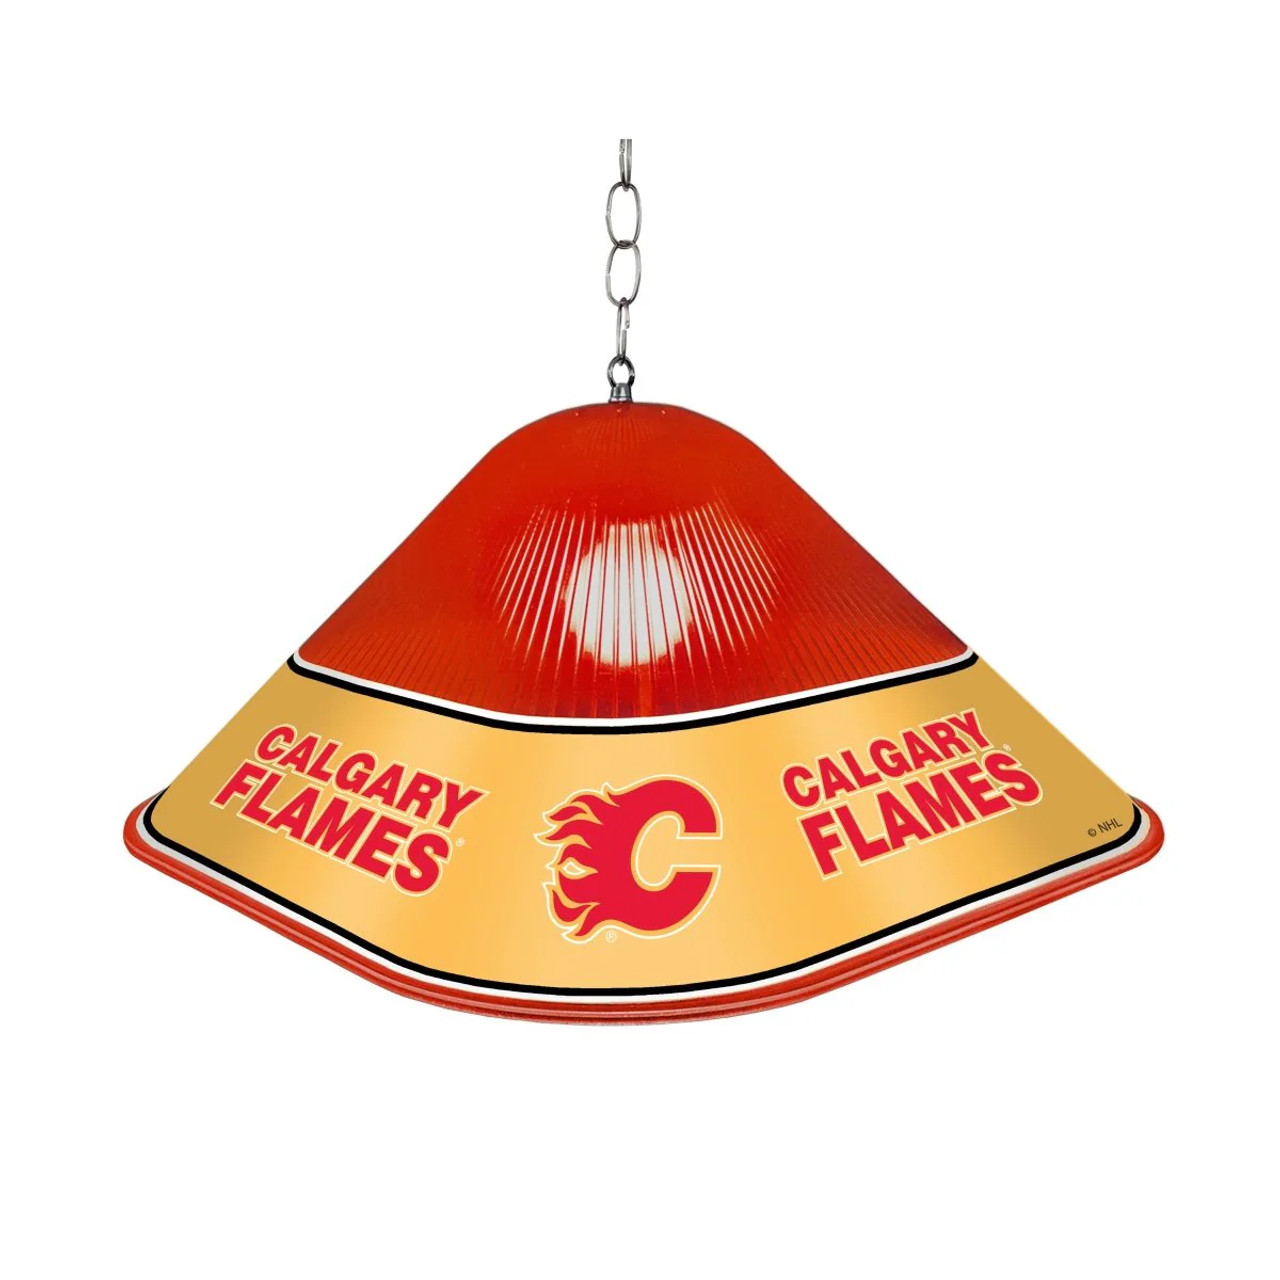 Calgary, Flames, Game, Table, Light, Lamp, NHCALG-410-01, The Fan-Brand, NHL, 737547360389